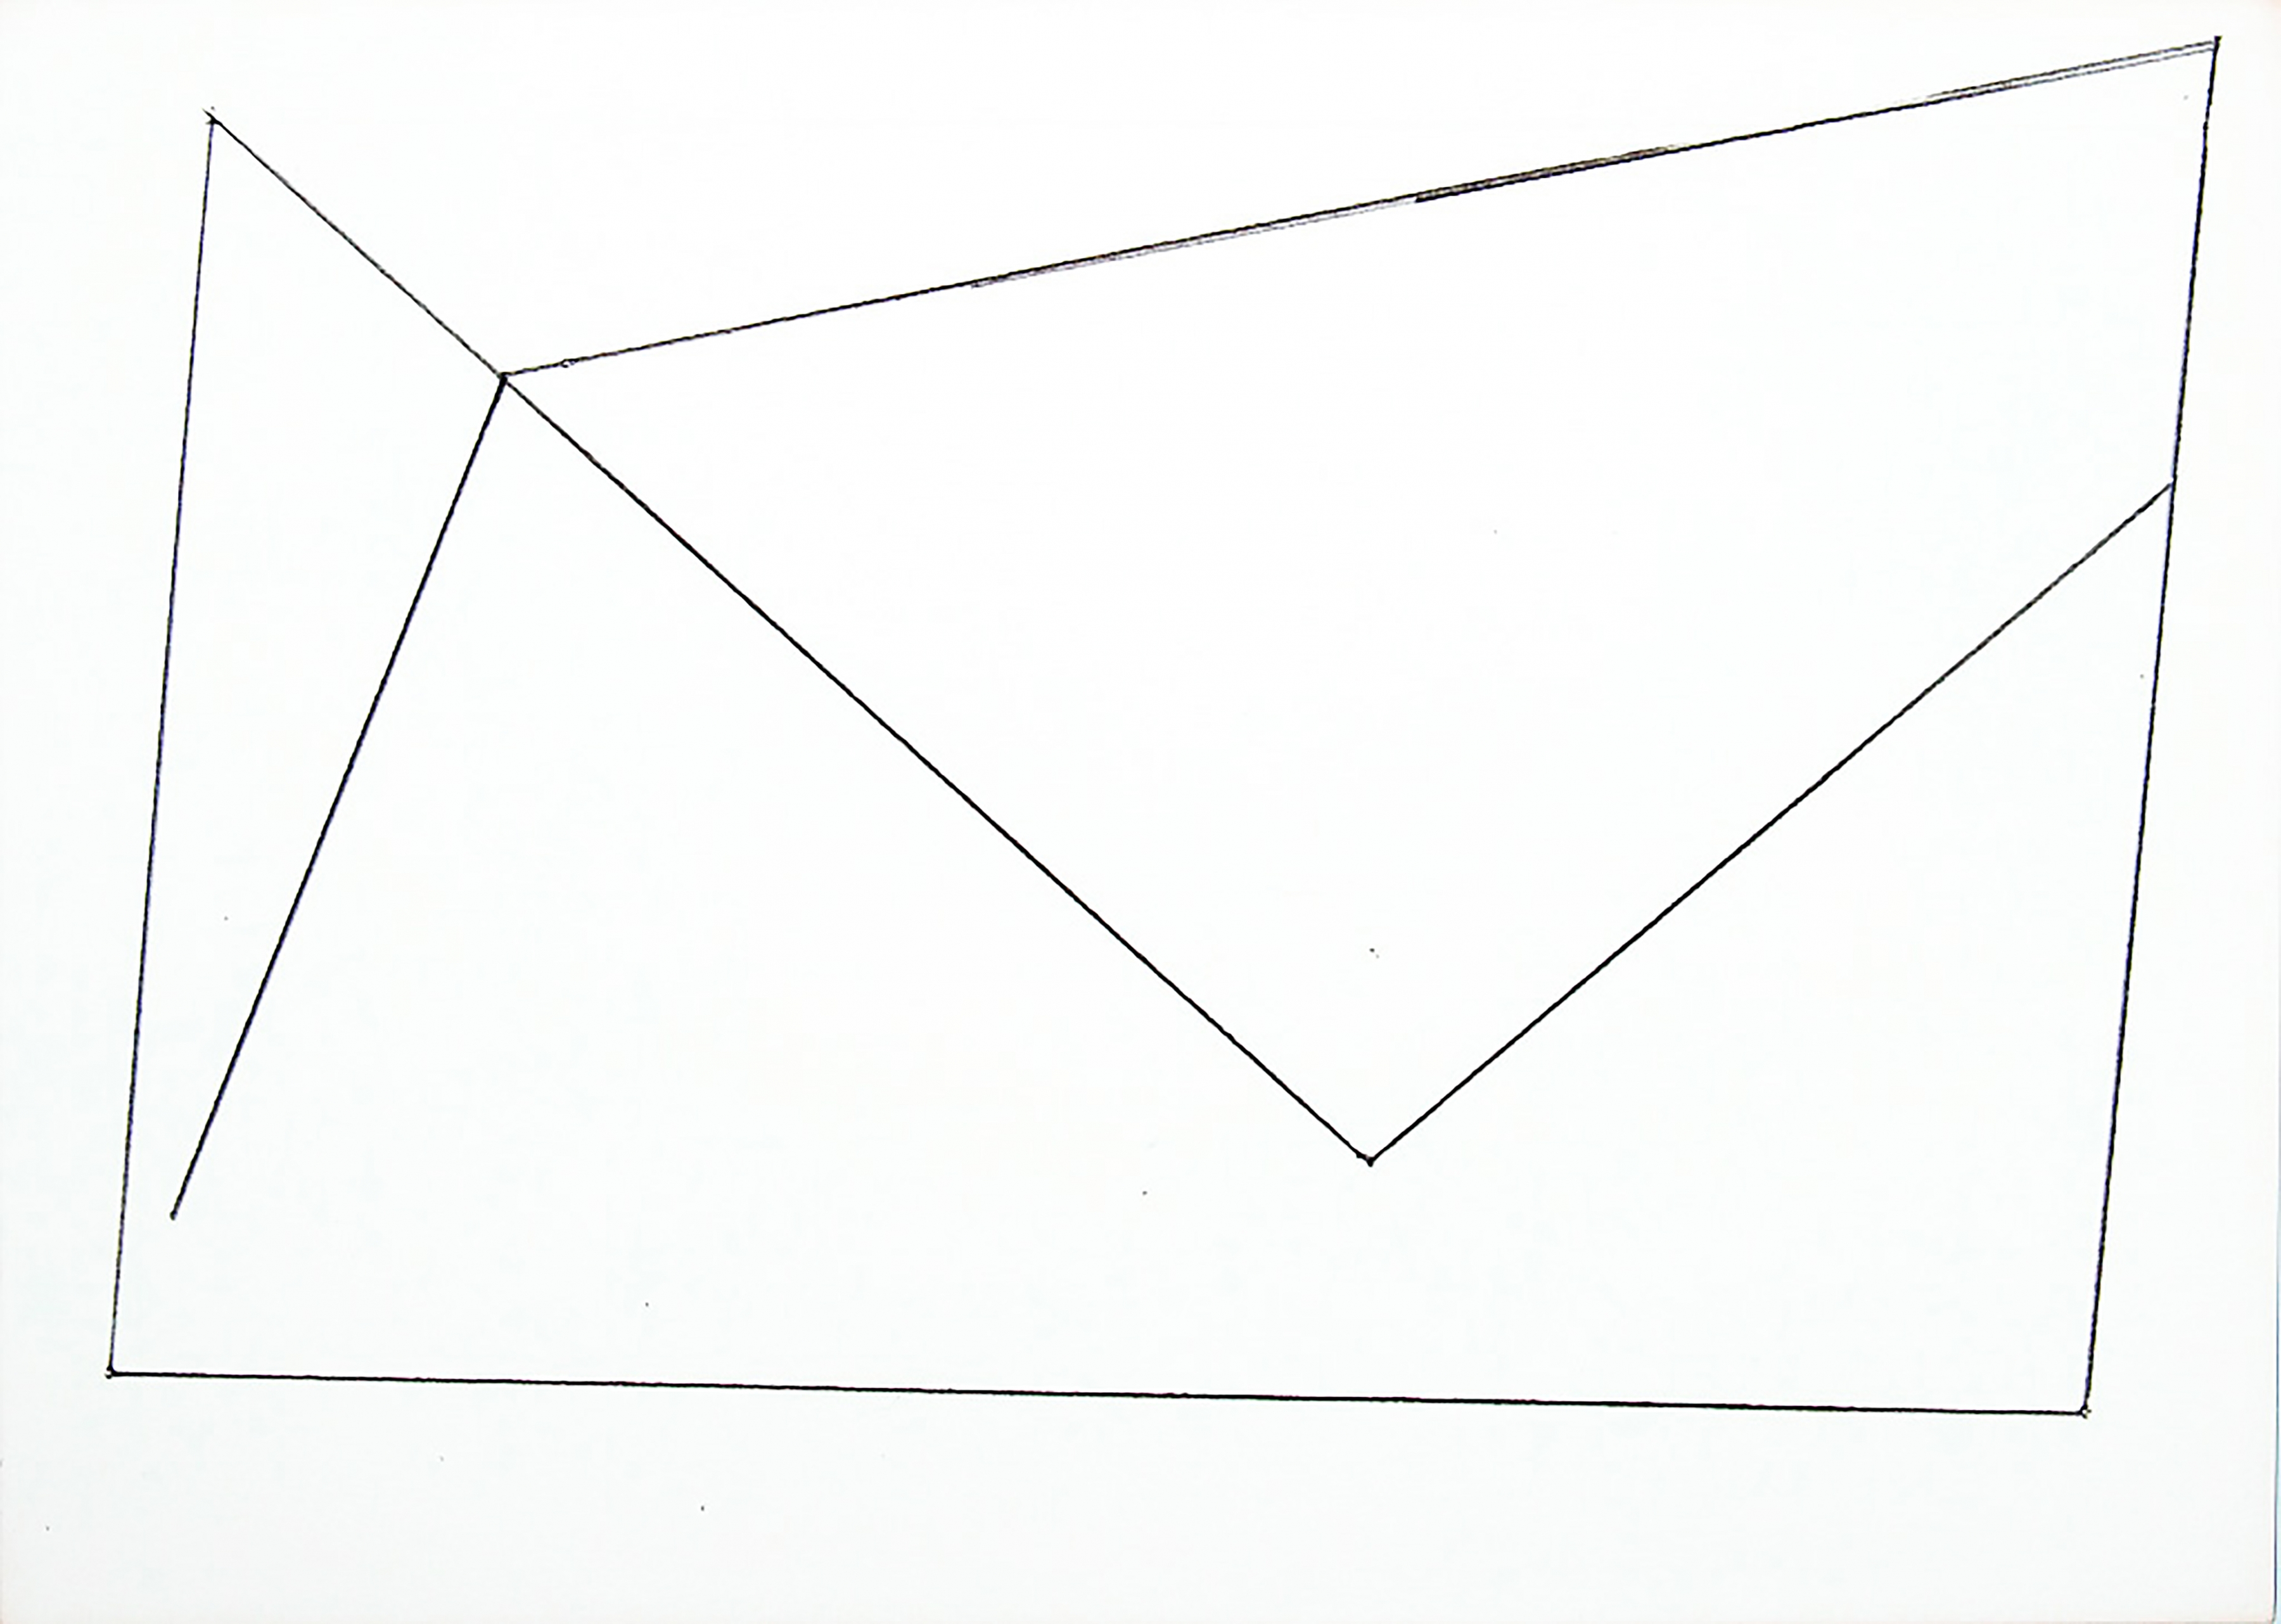 Untitled,&nbsp;Circa 1980

Pencil on paper
32 x 44 cm / 12.6 x 17.3 in.

Enquiries